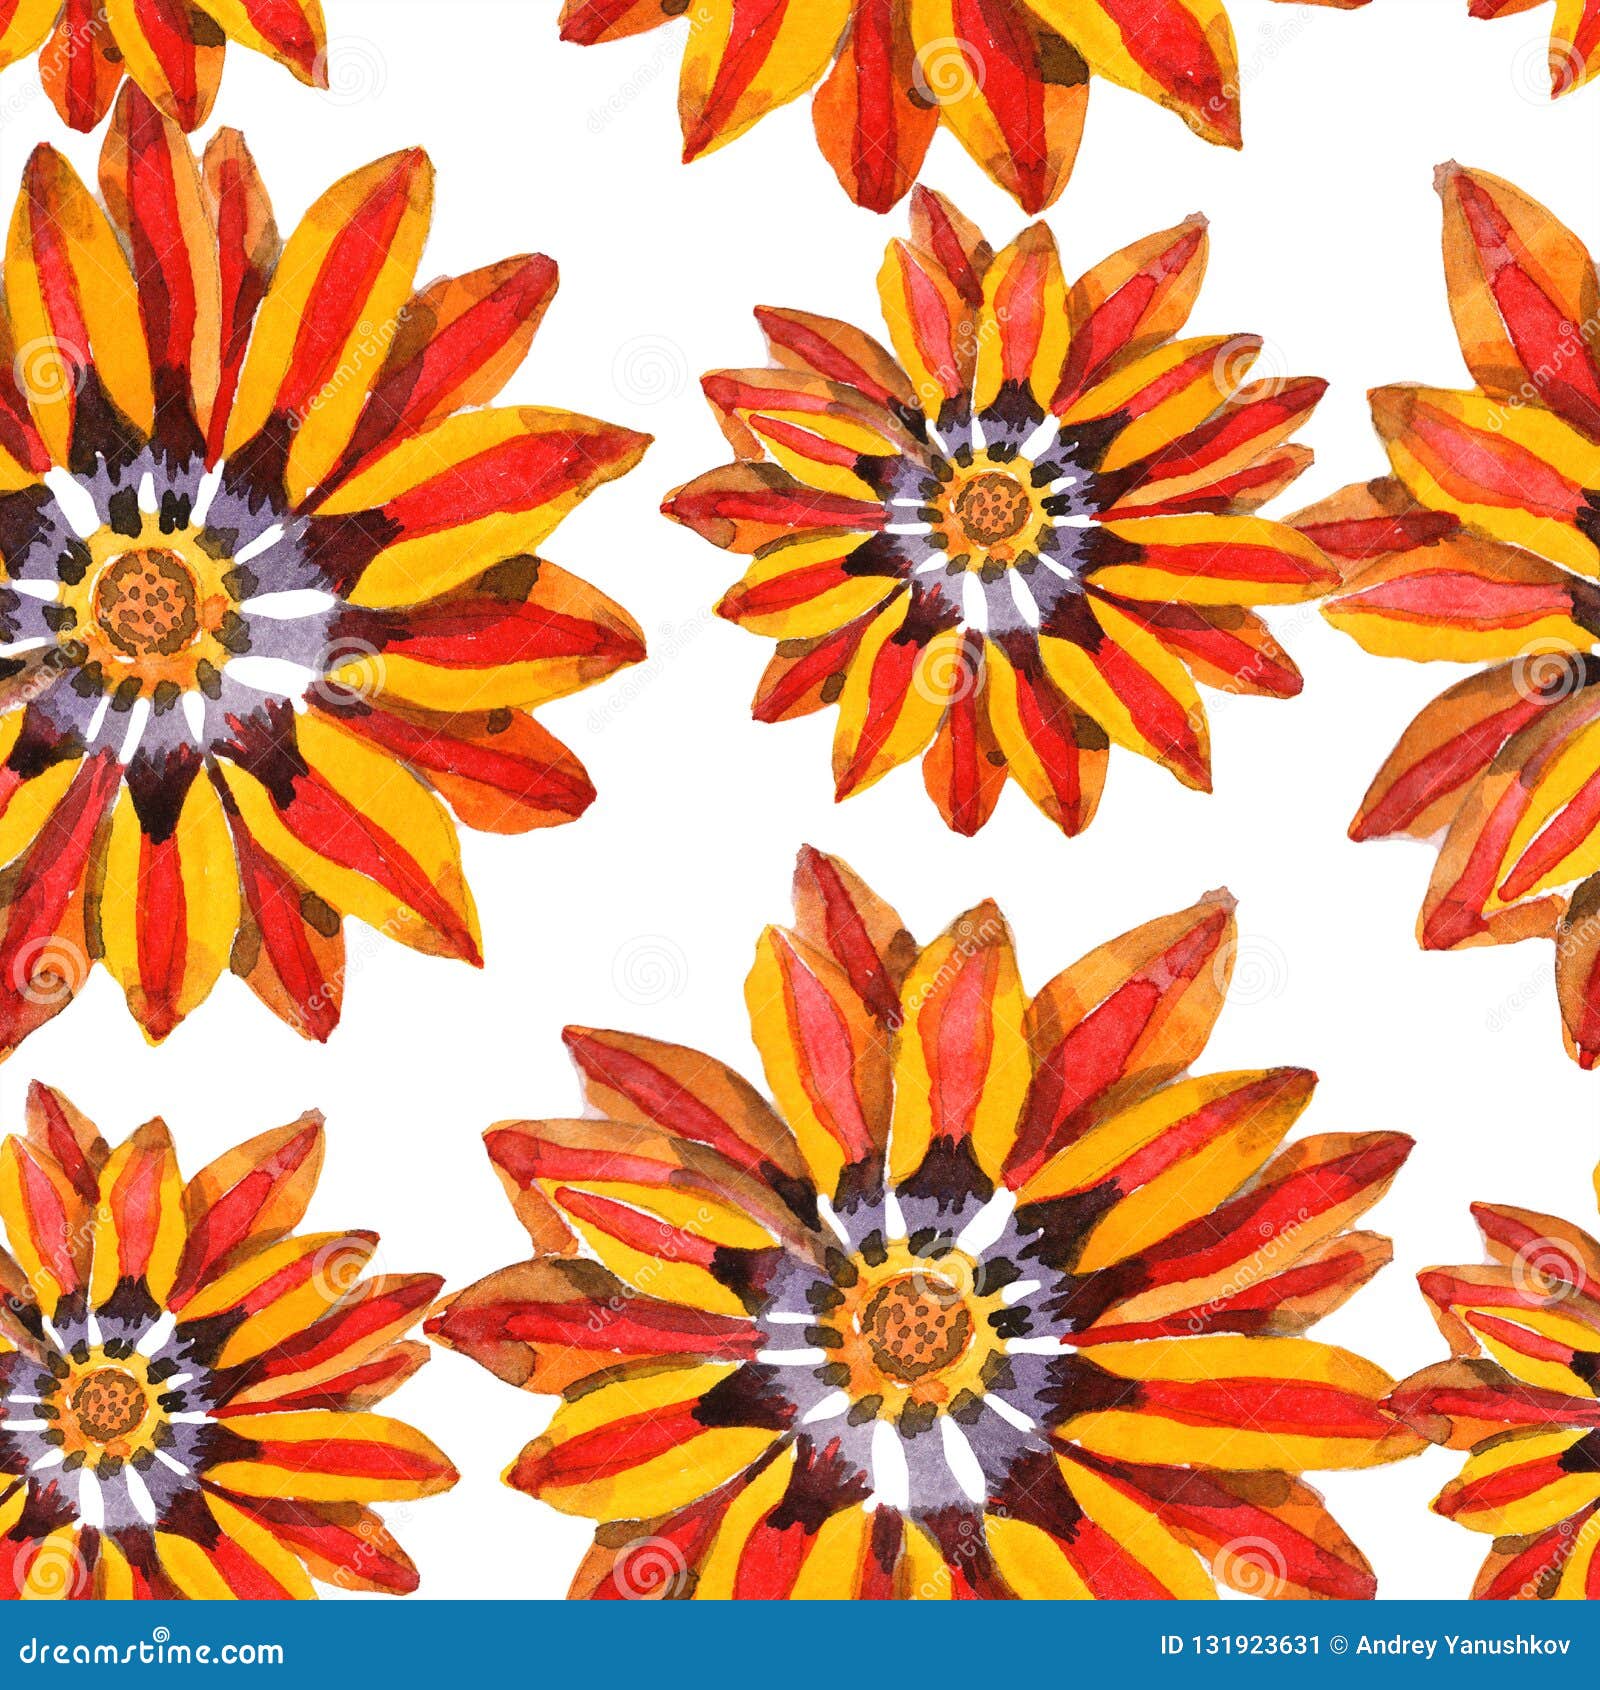 110 Flower Backgrounds - World of Printables